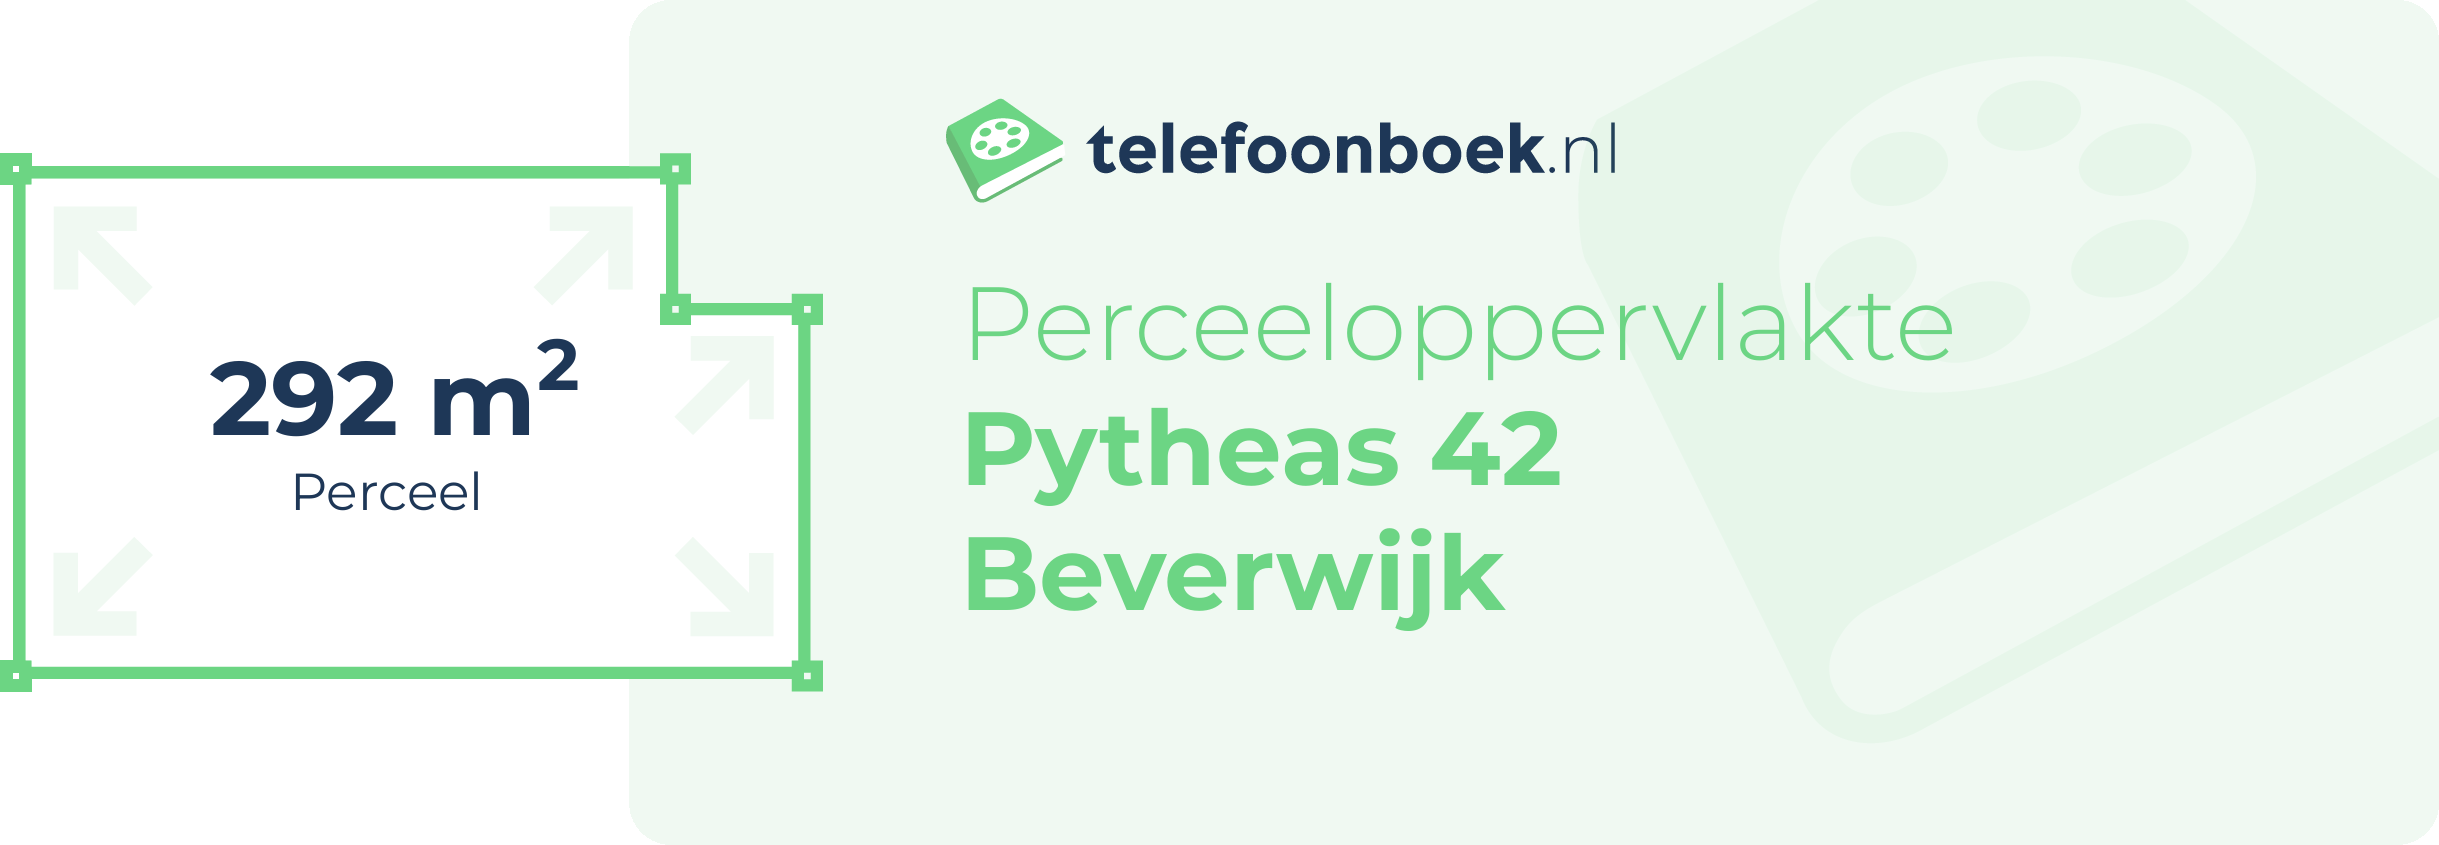 Perceeloppervlakte Pytheas 42 Beverwijk